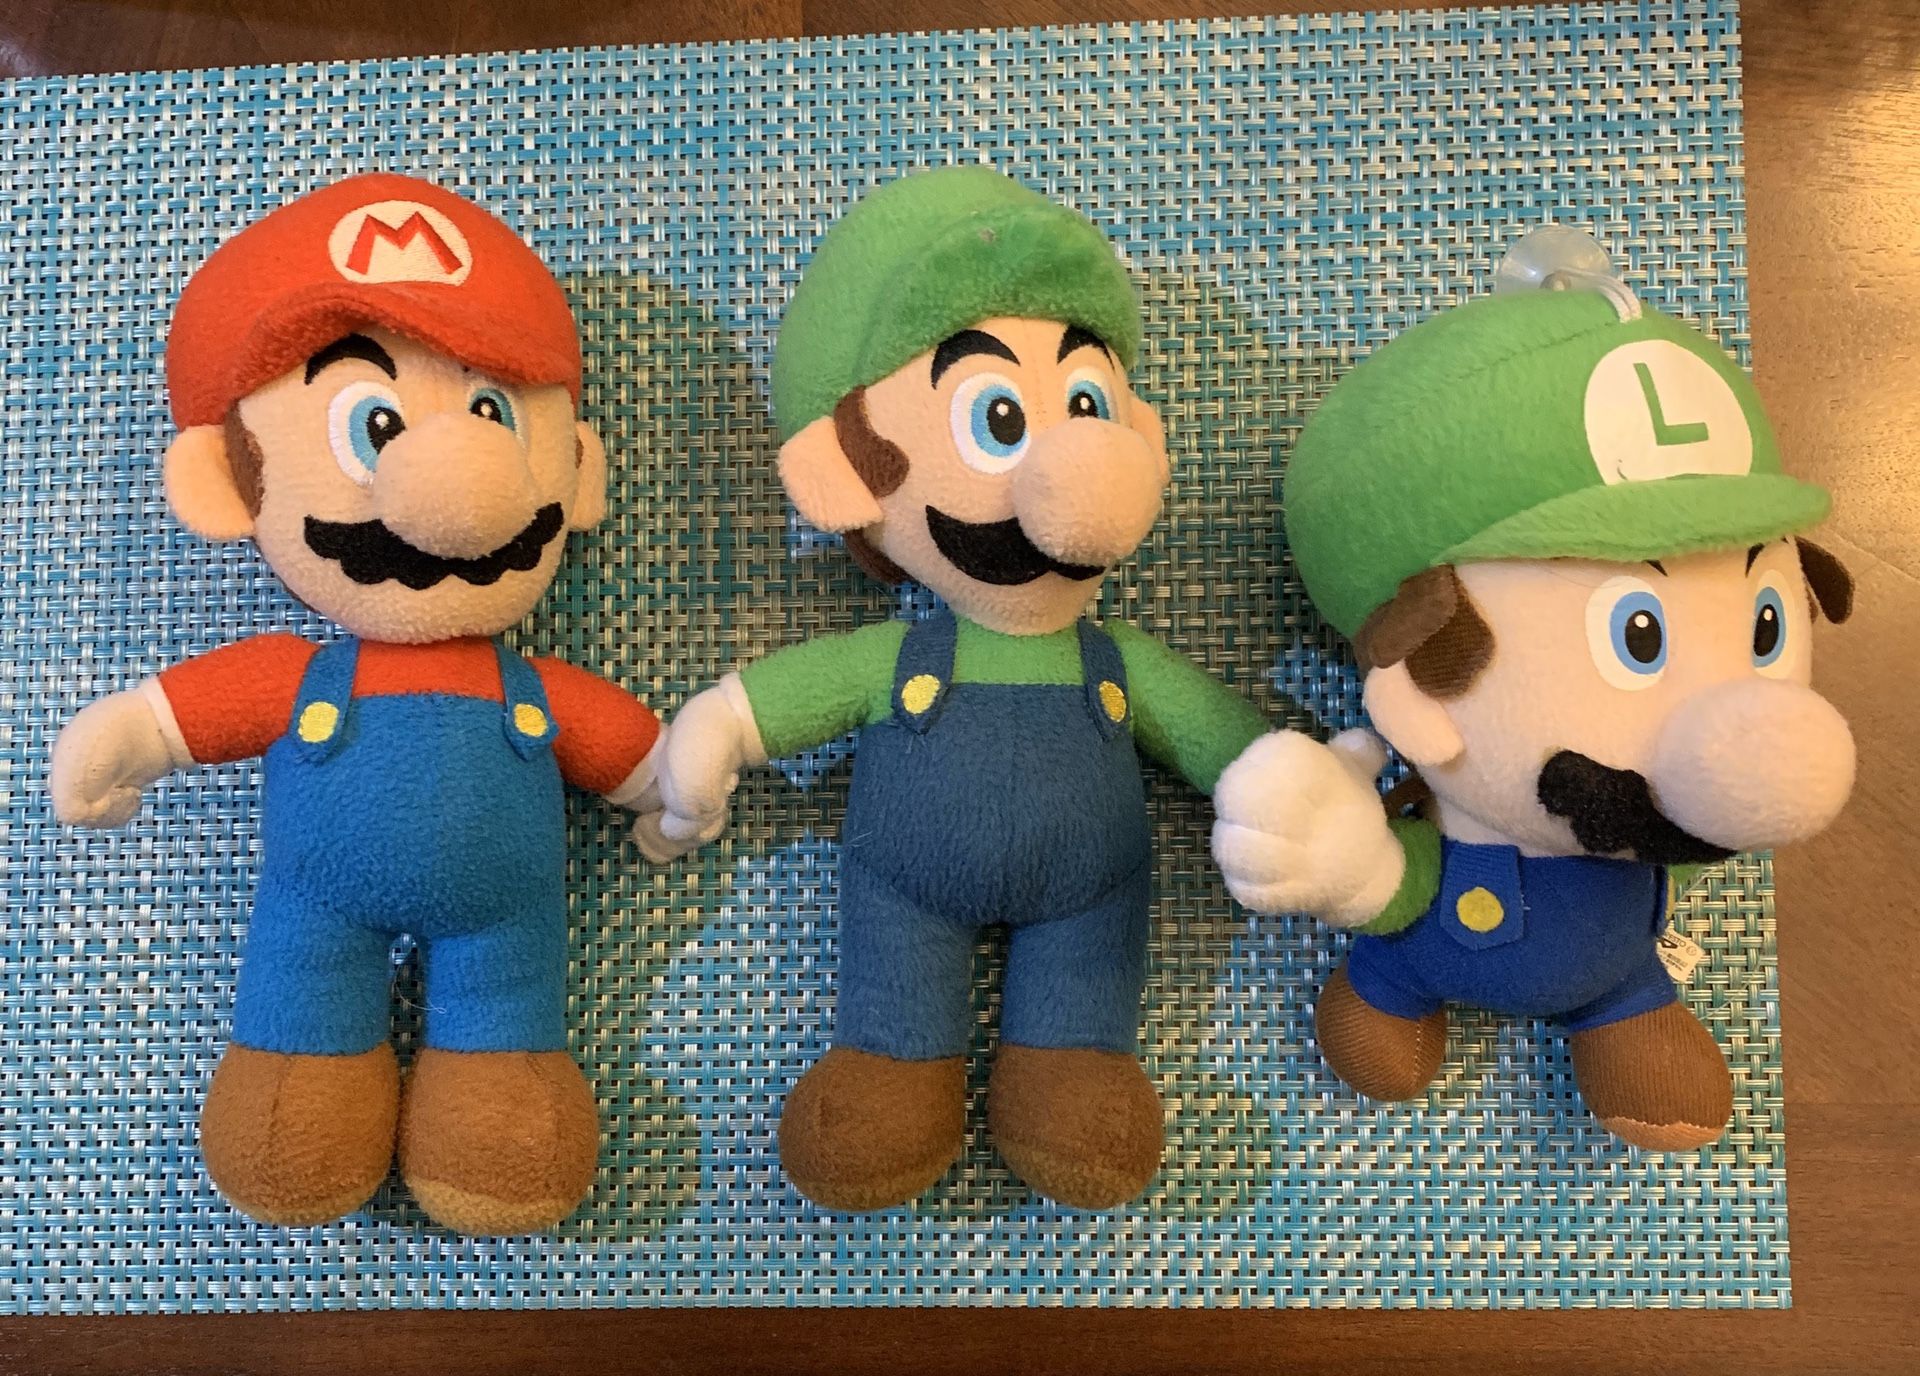 Mario and Luigi stuffed animals